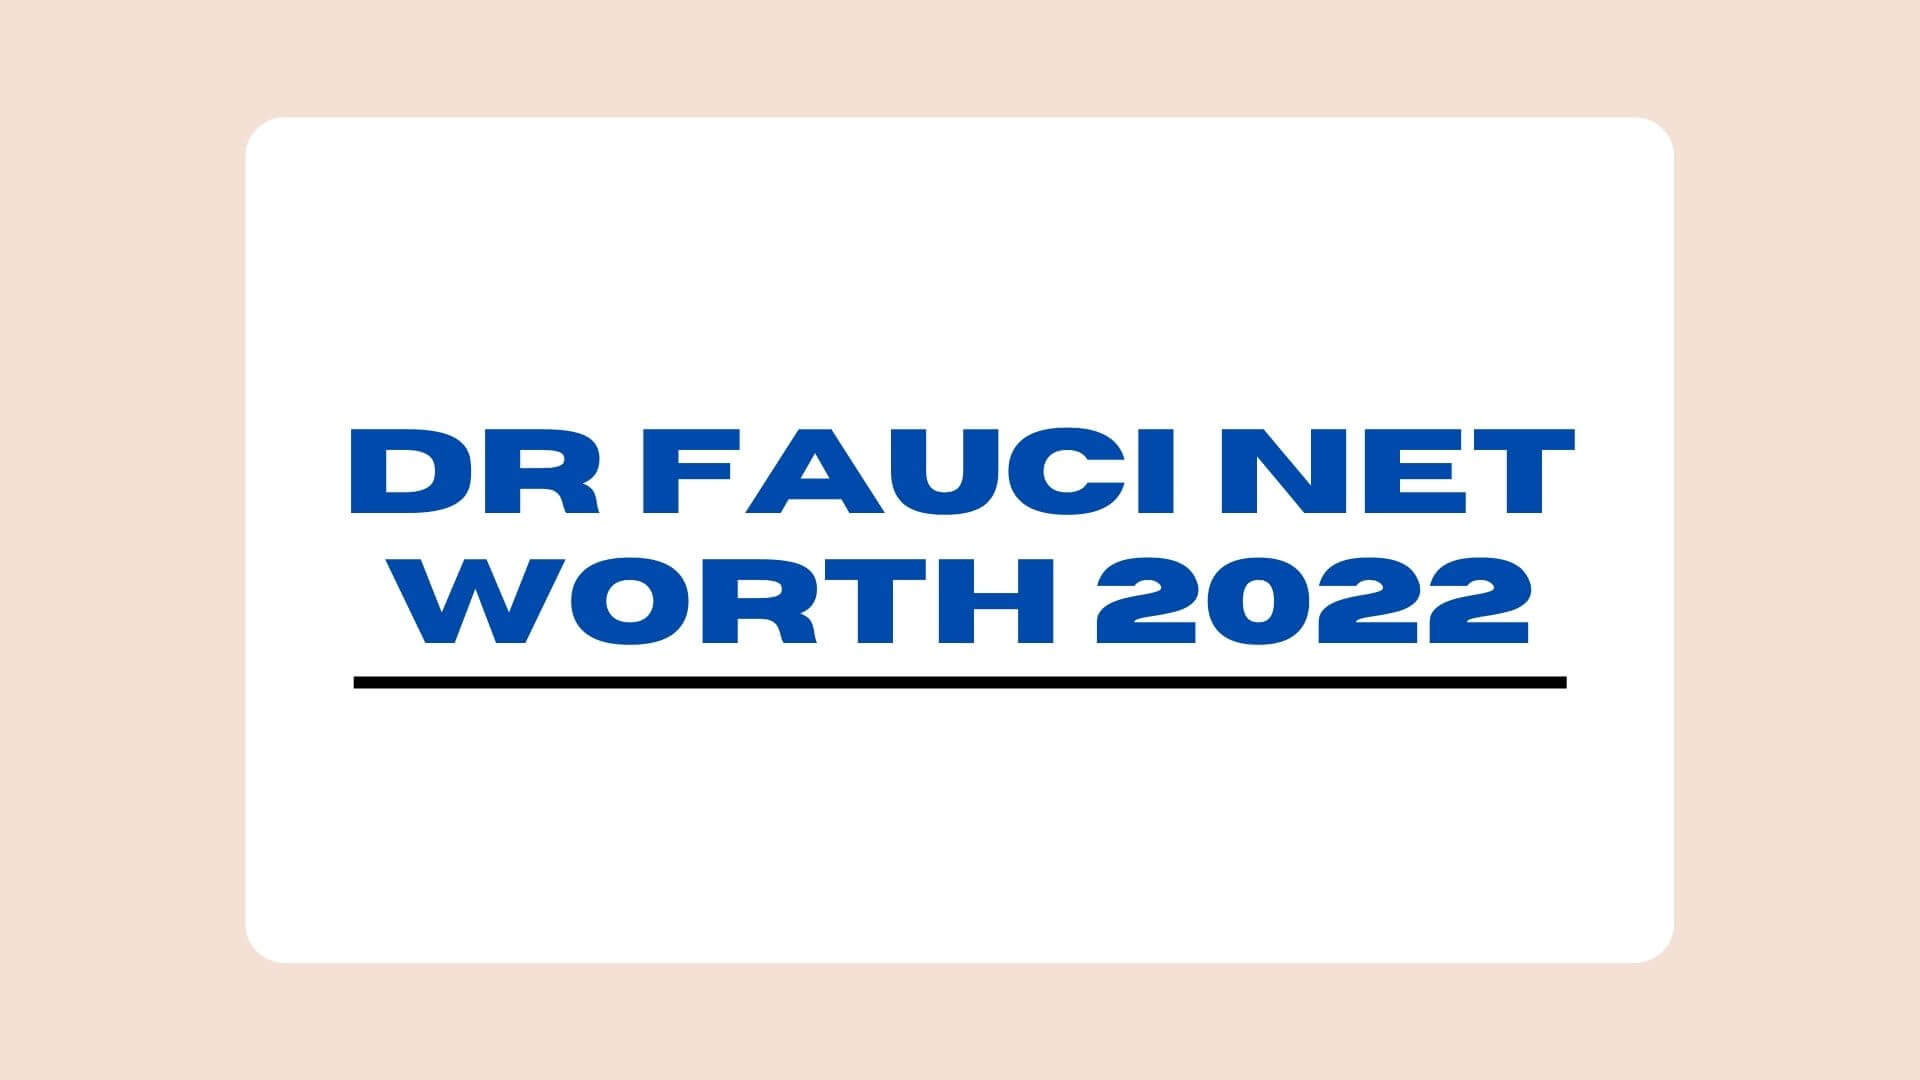 Dr Fauci Net Worth 2022